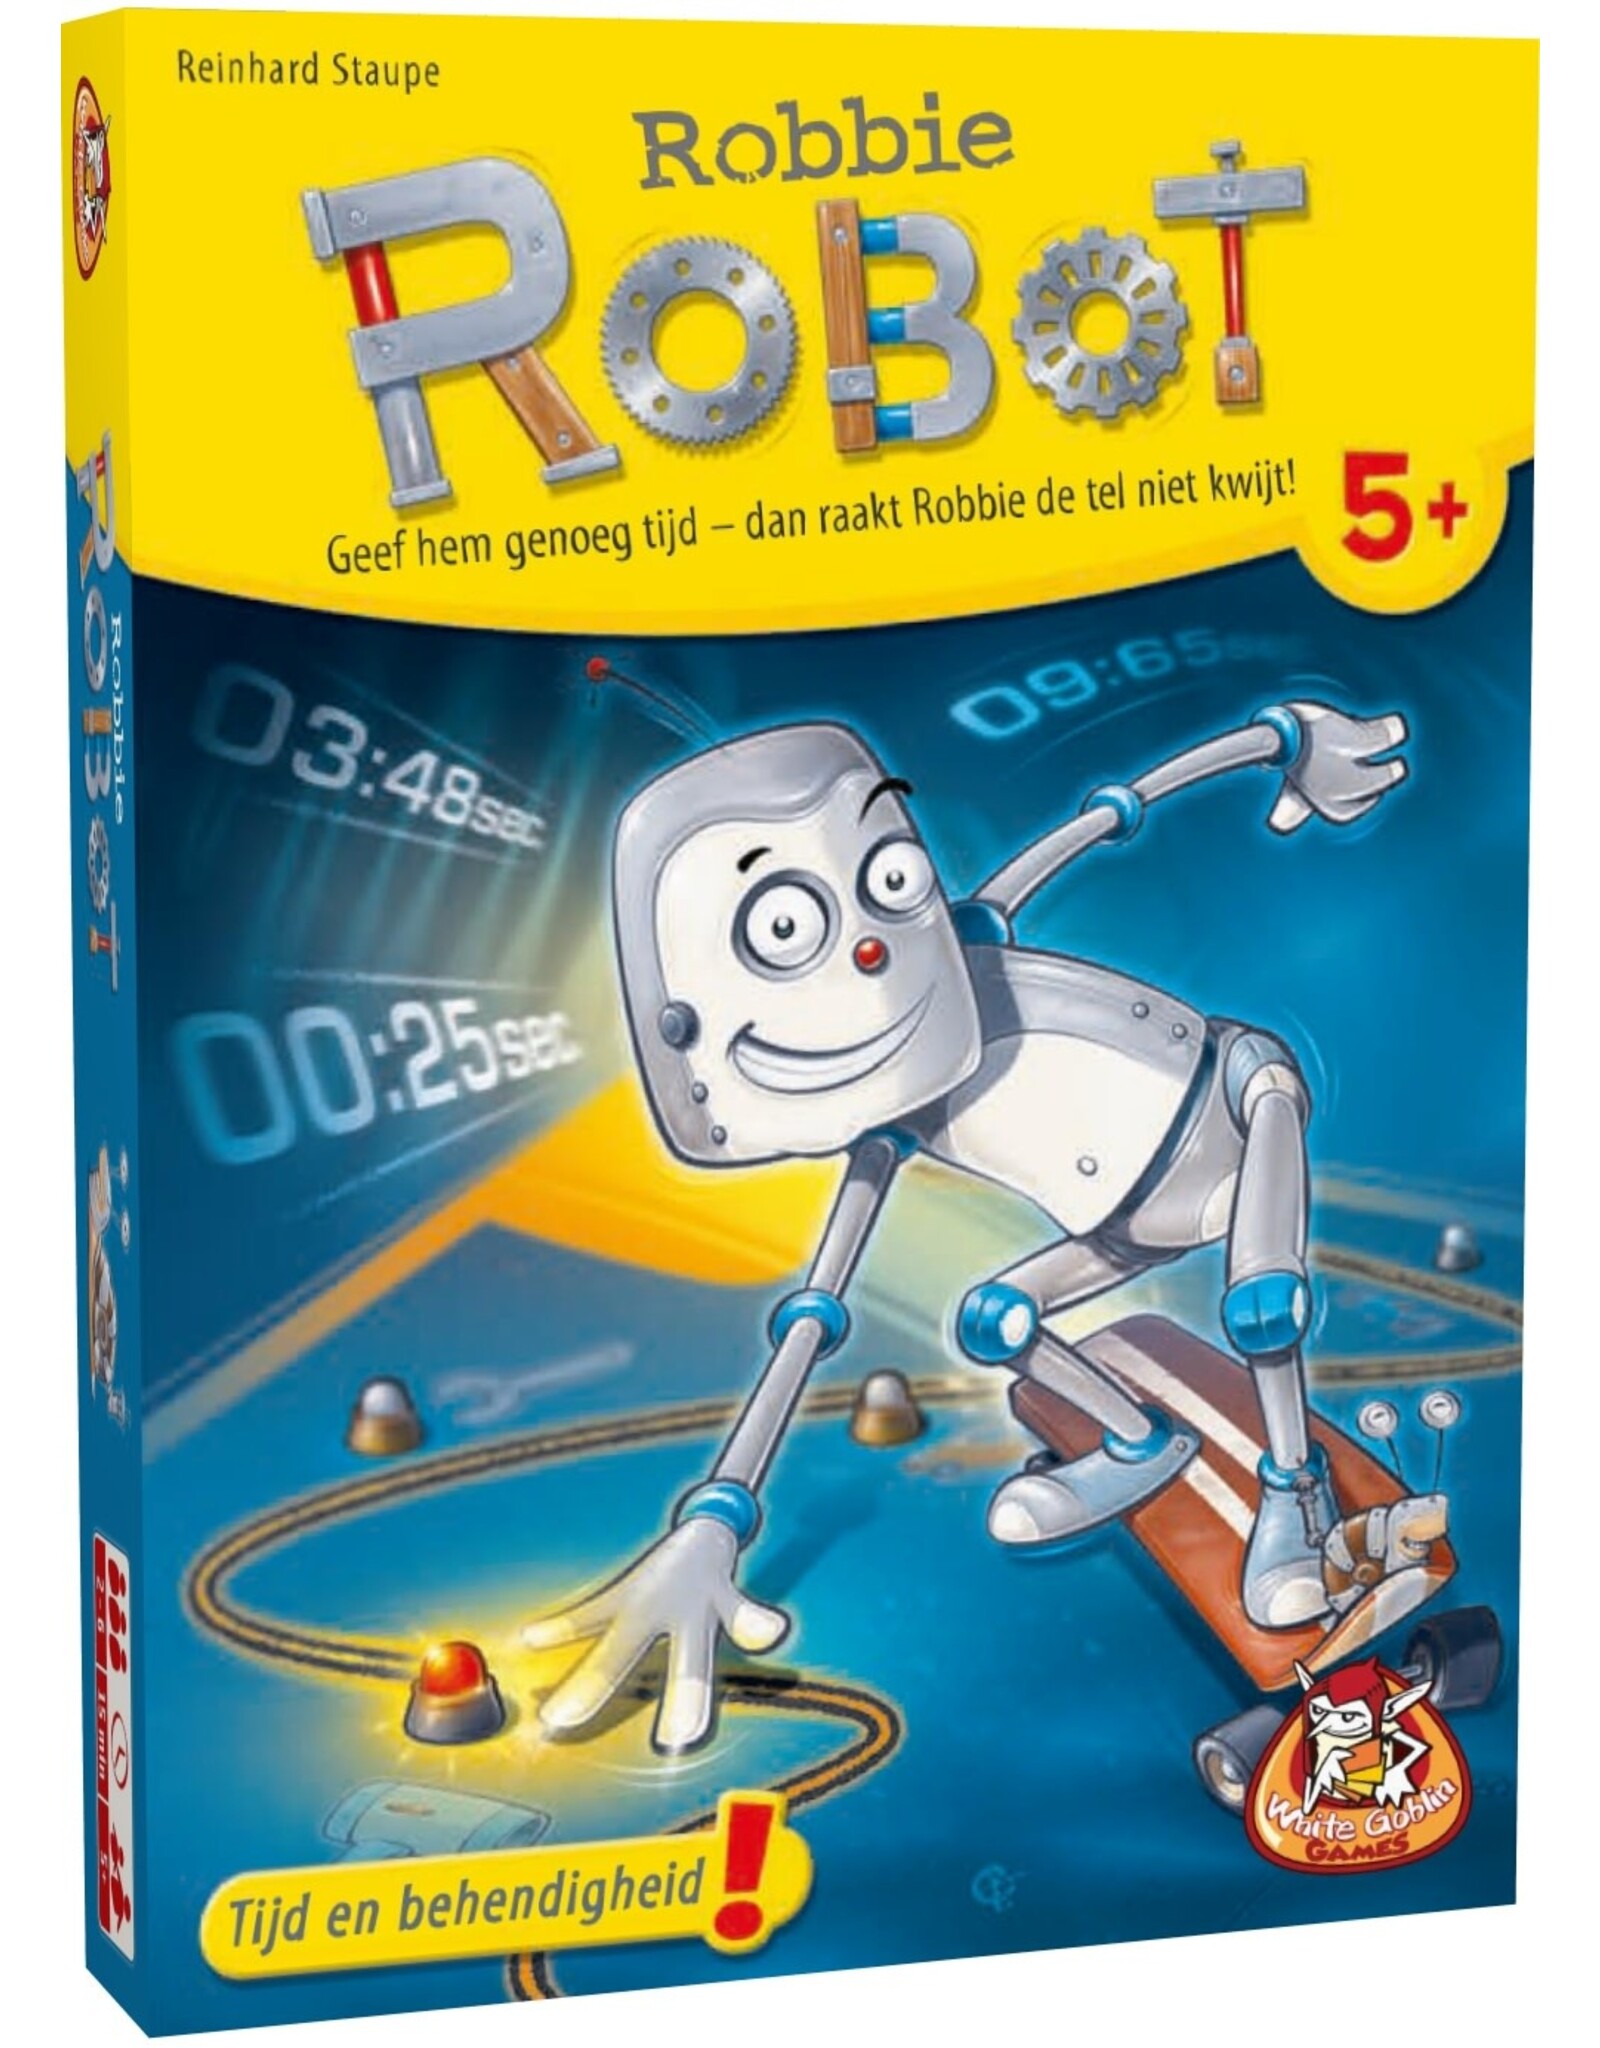 White Goblin Games Robbie Robot